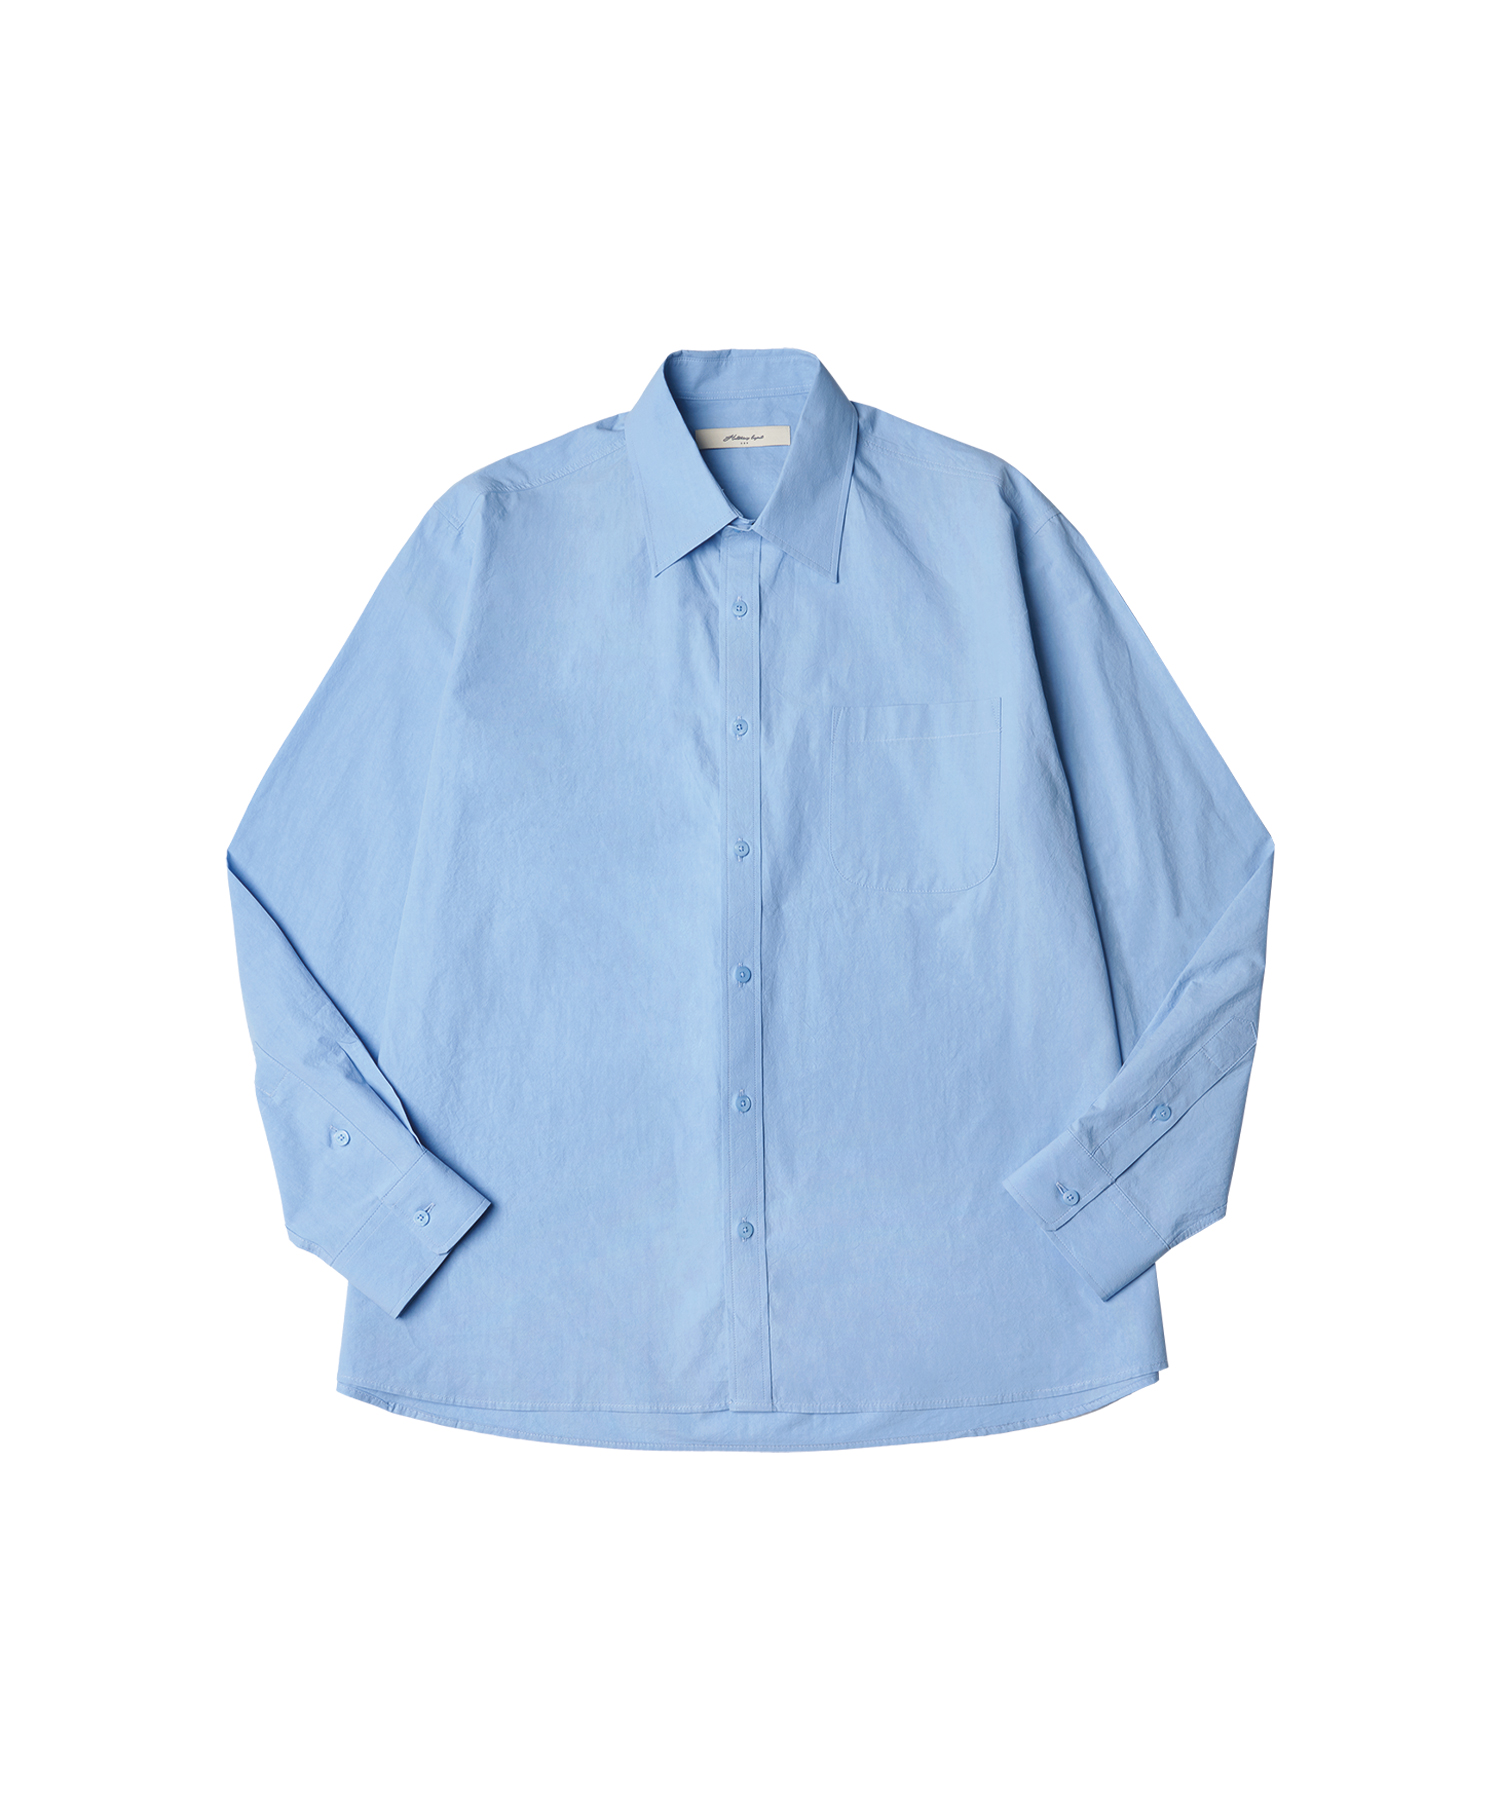 T20023 Dyeing color shirt_Sky blue